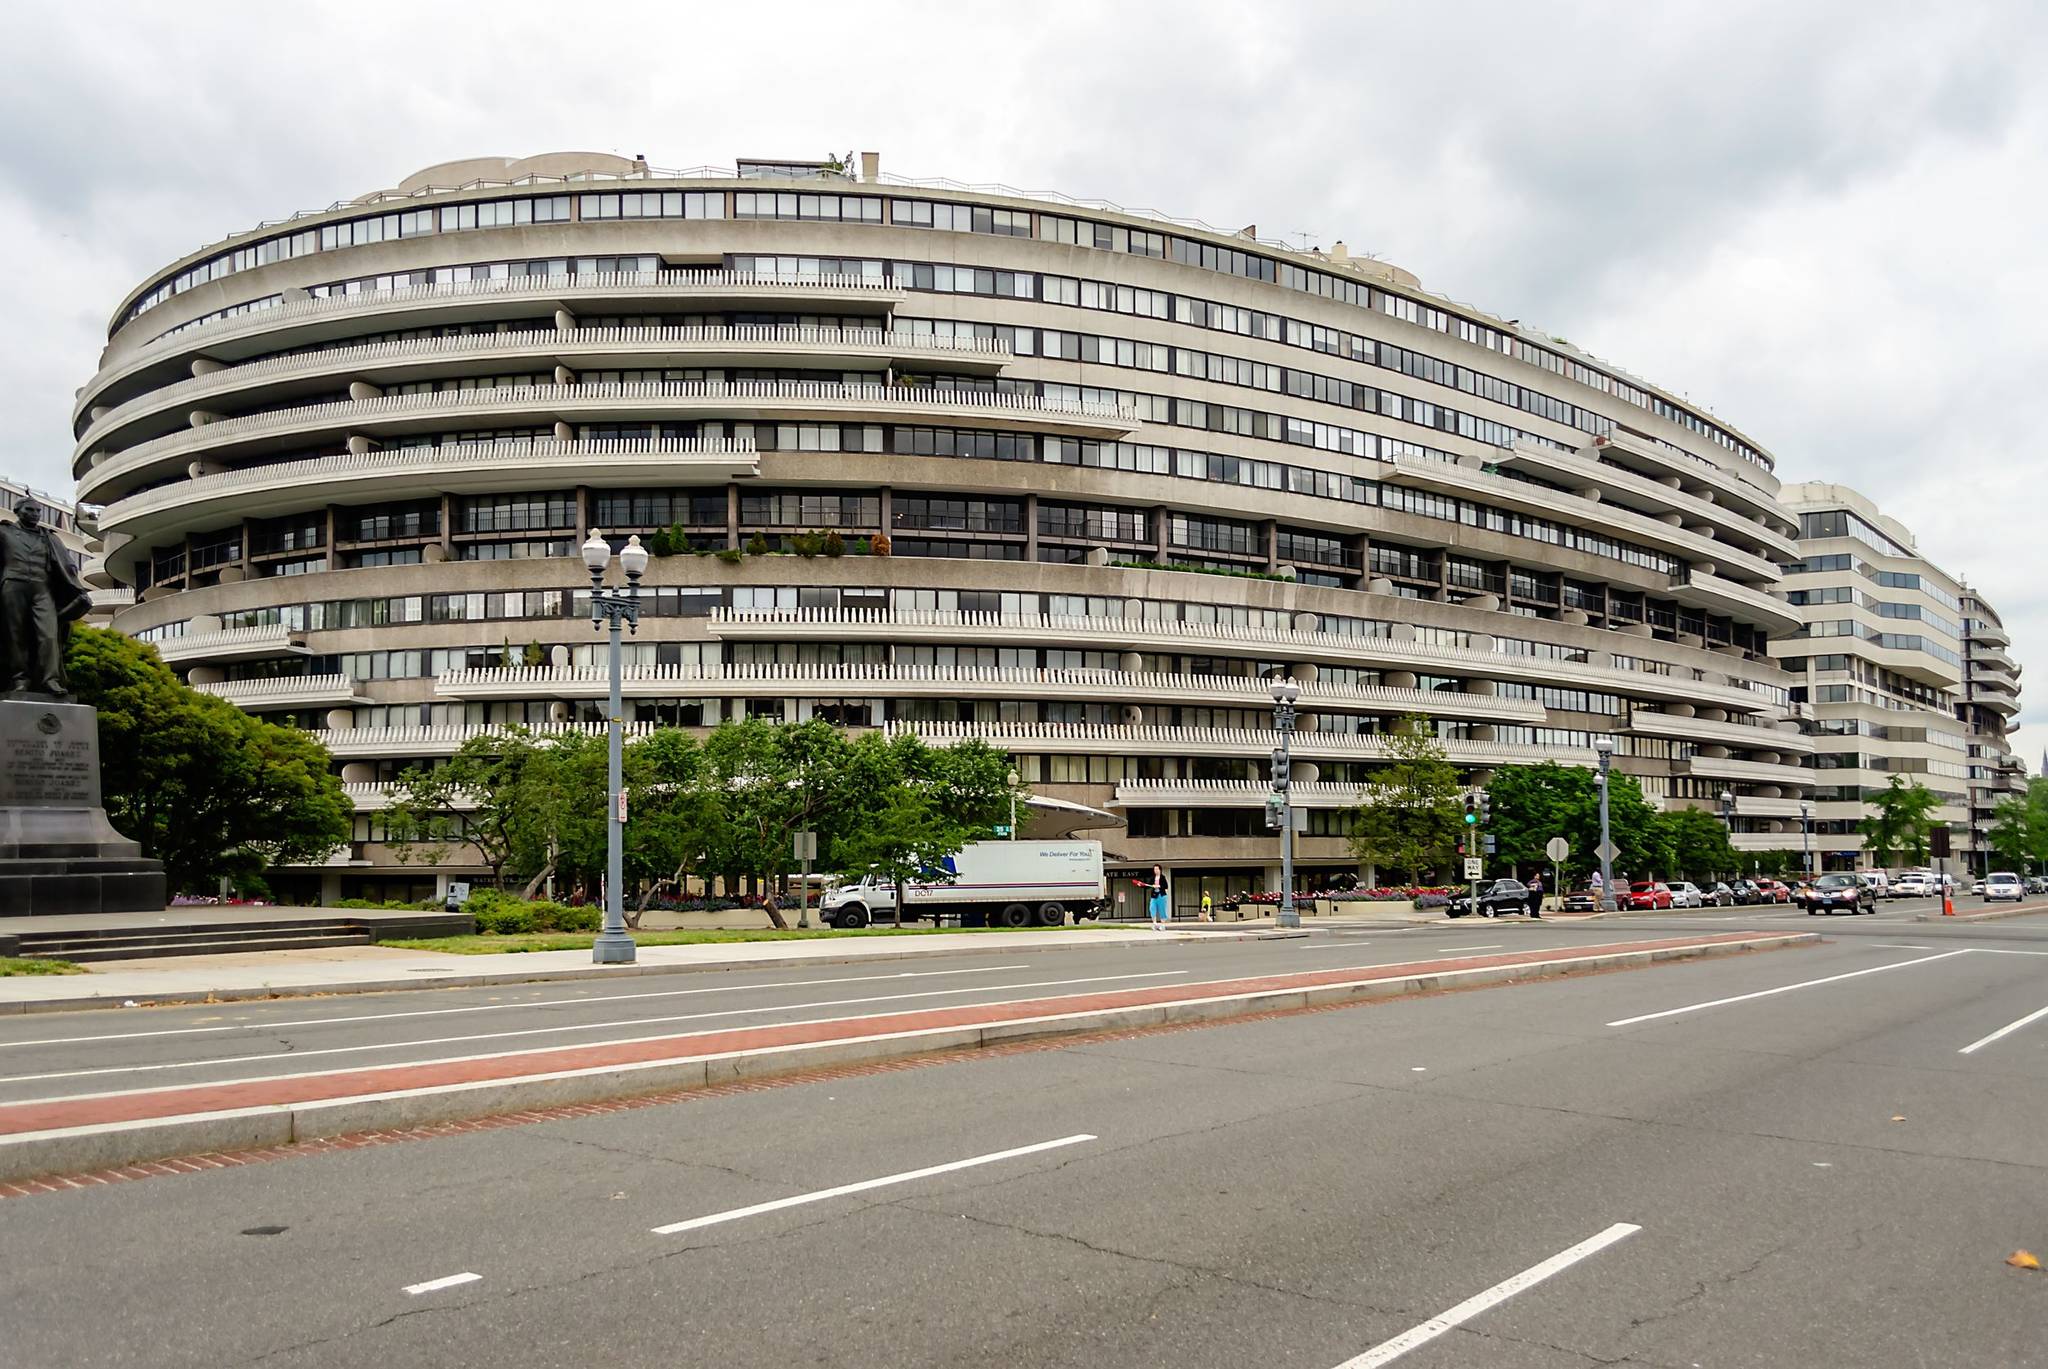 The Watergate Complex, Washington, D.C. (123rf.com Stock Photo)